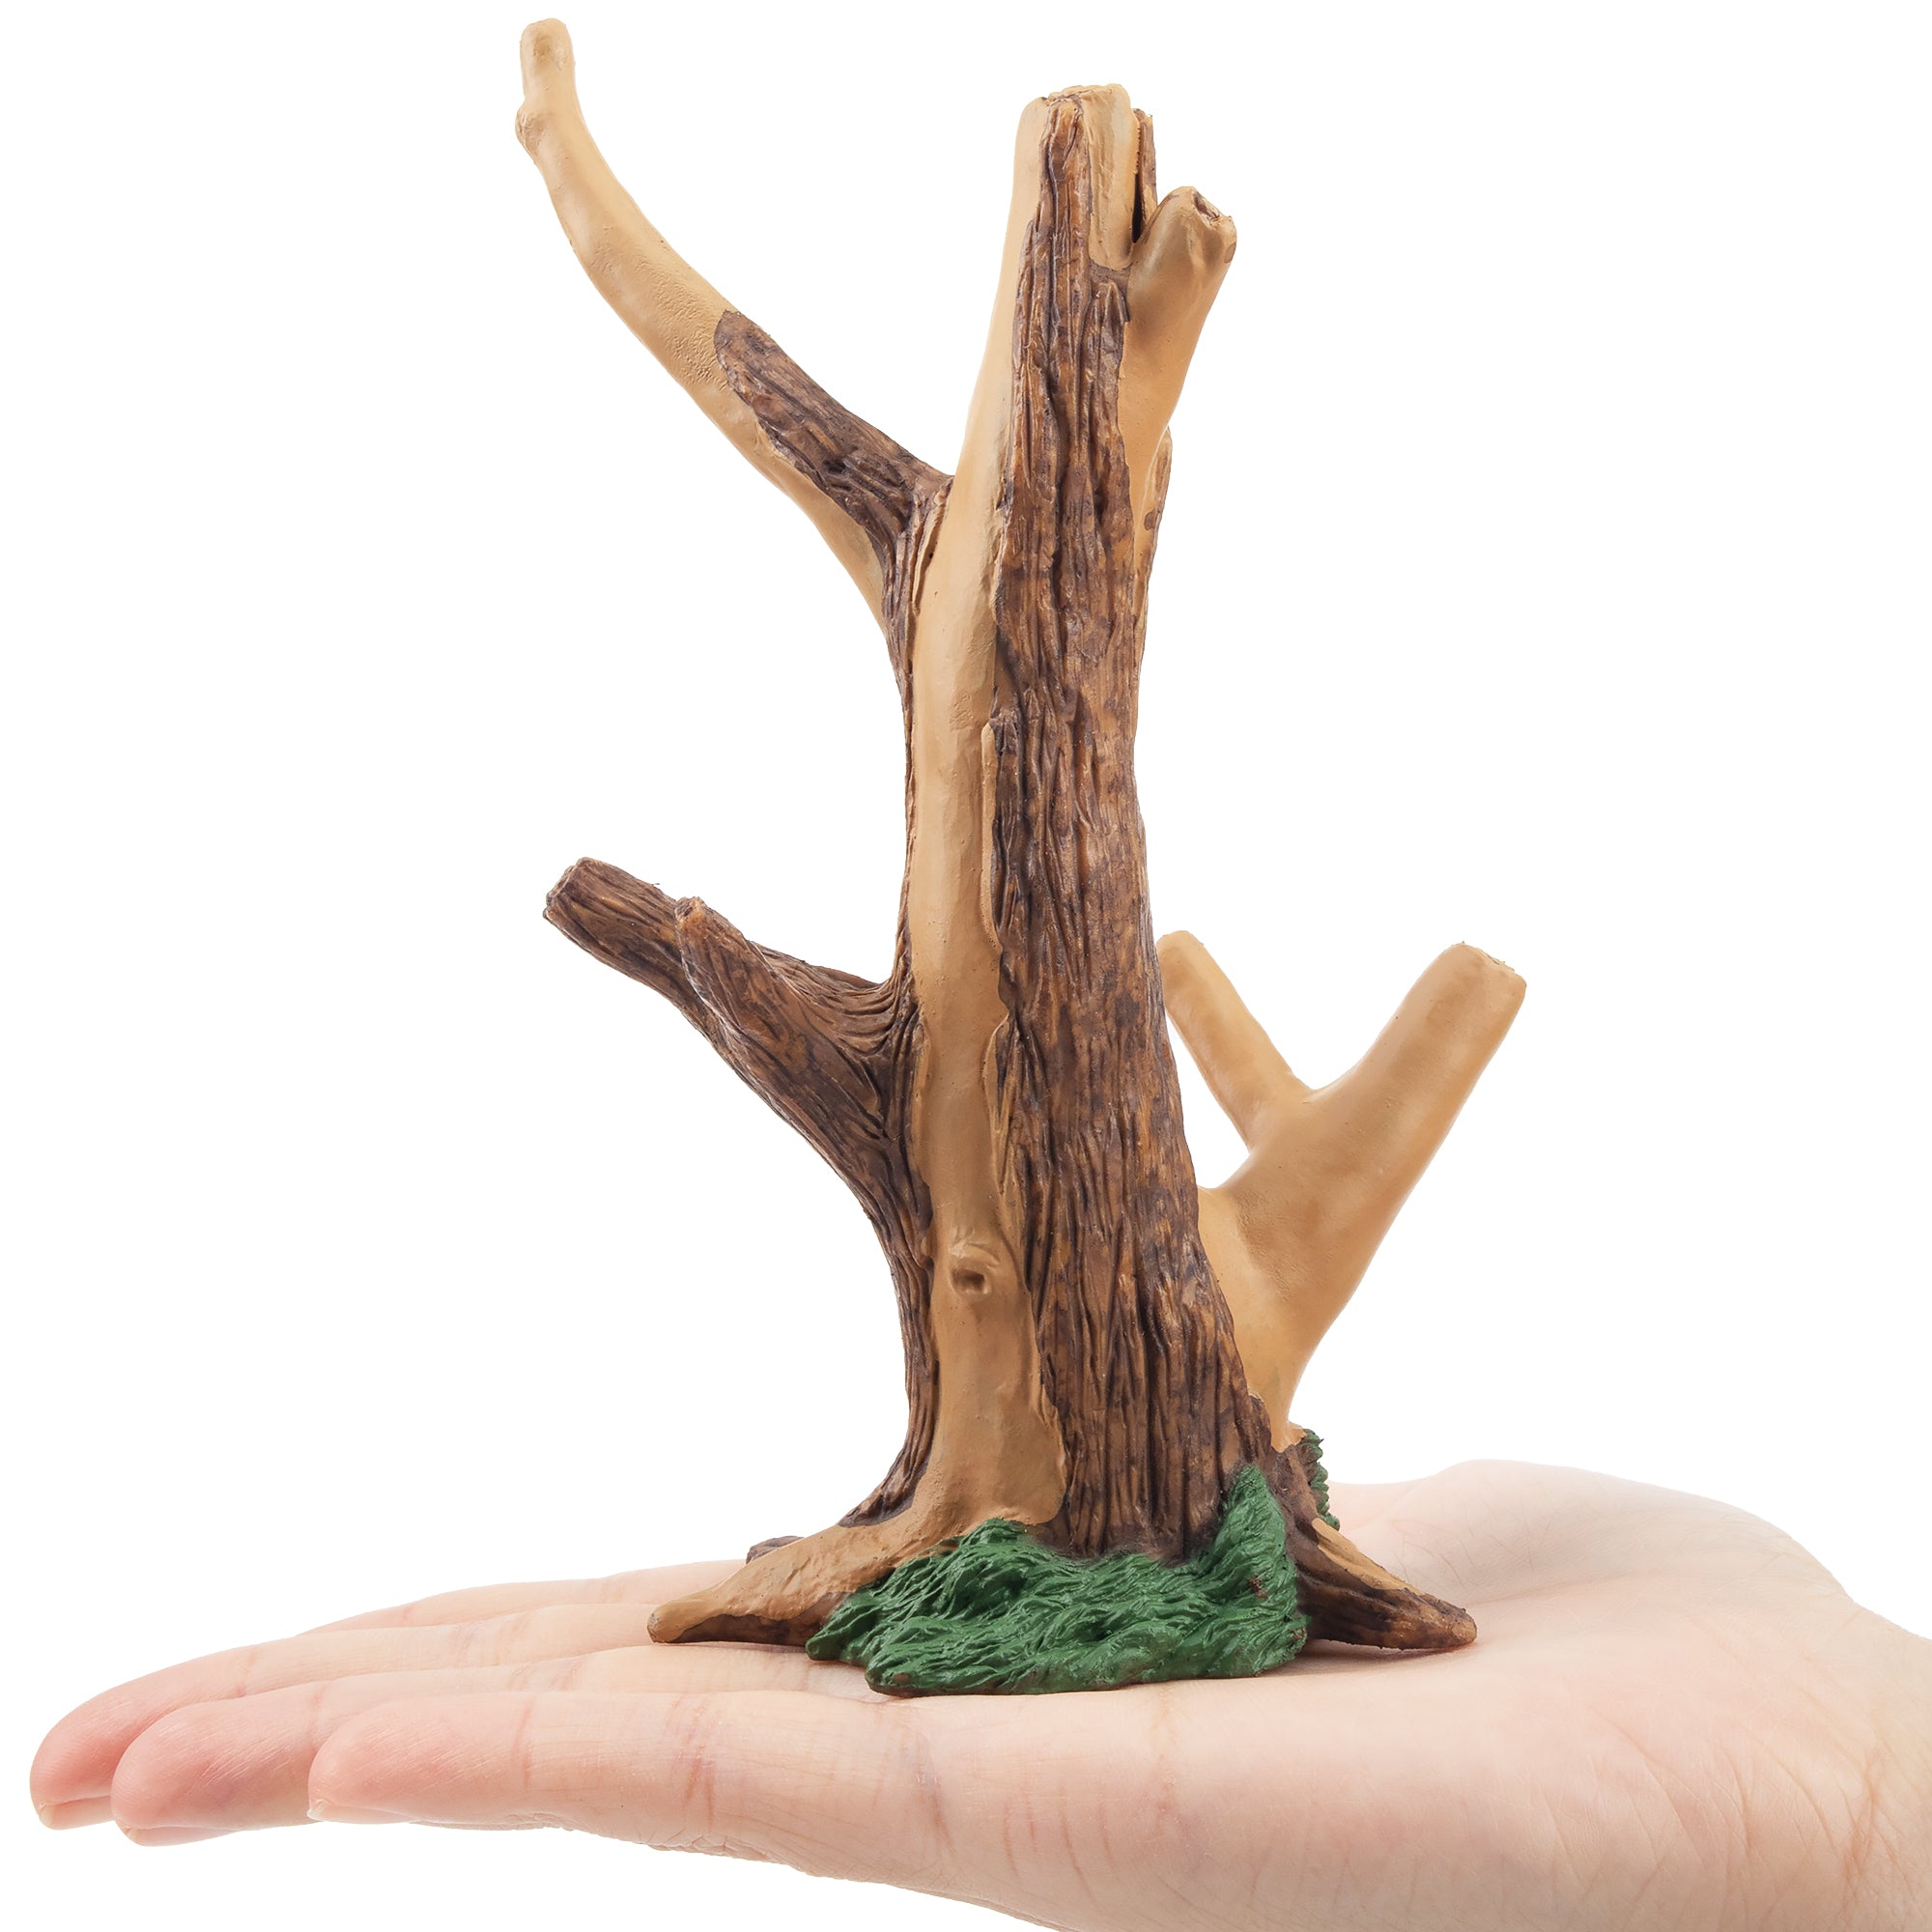 Toymany Miniature Forest Tree Accessory Figurine